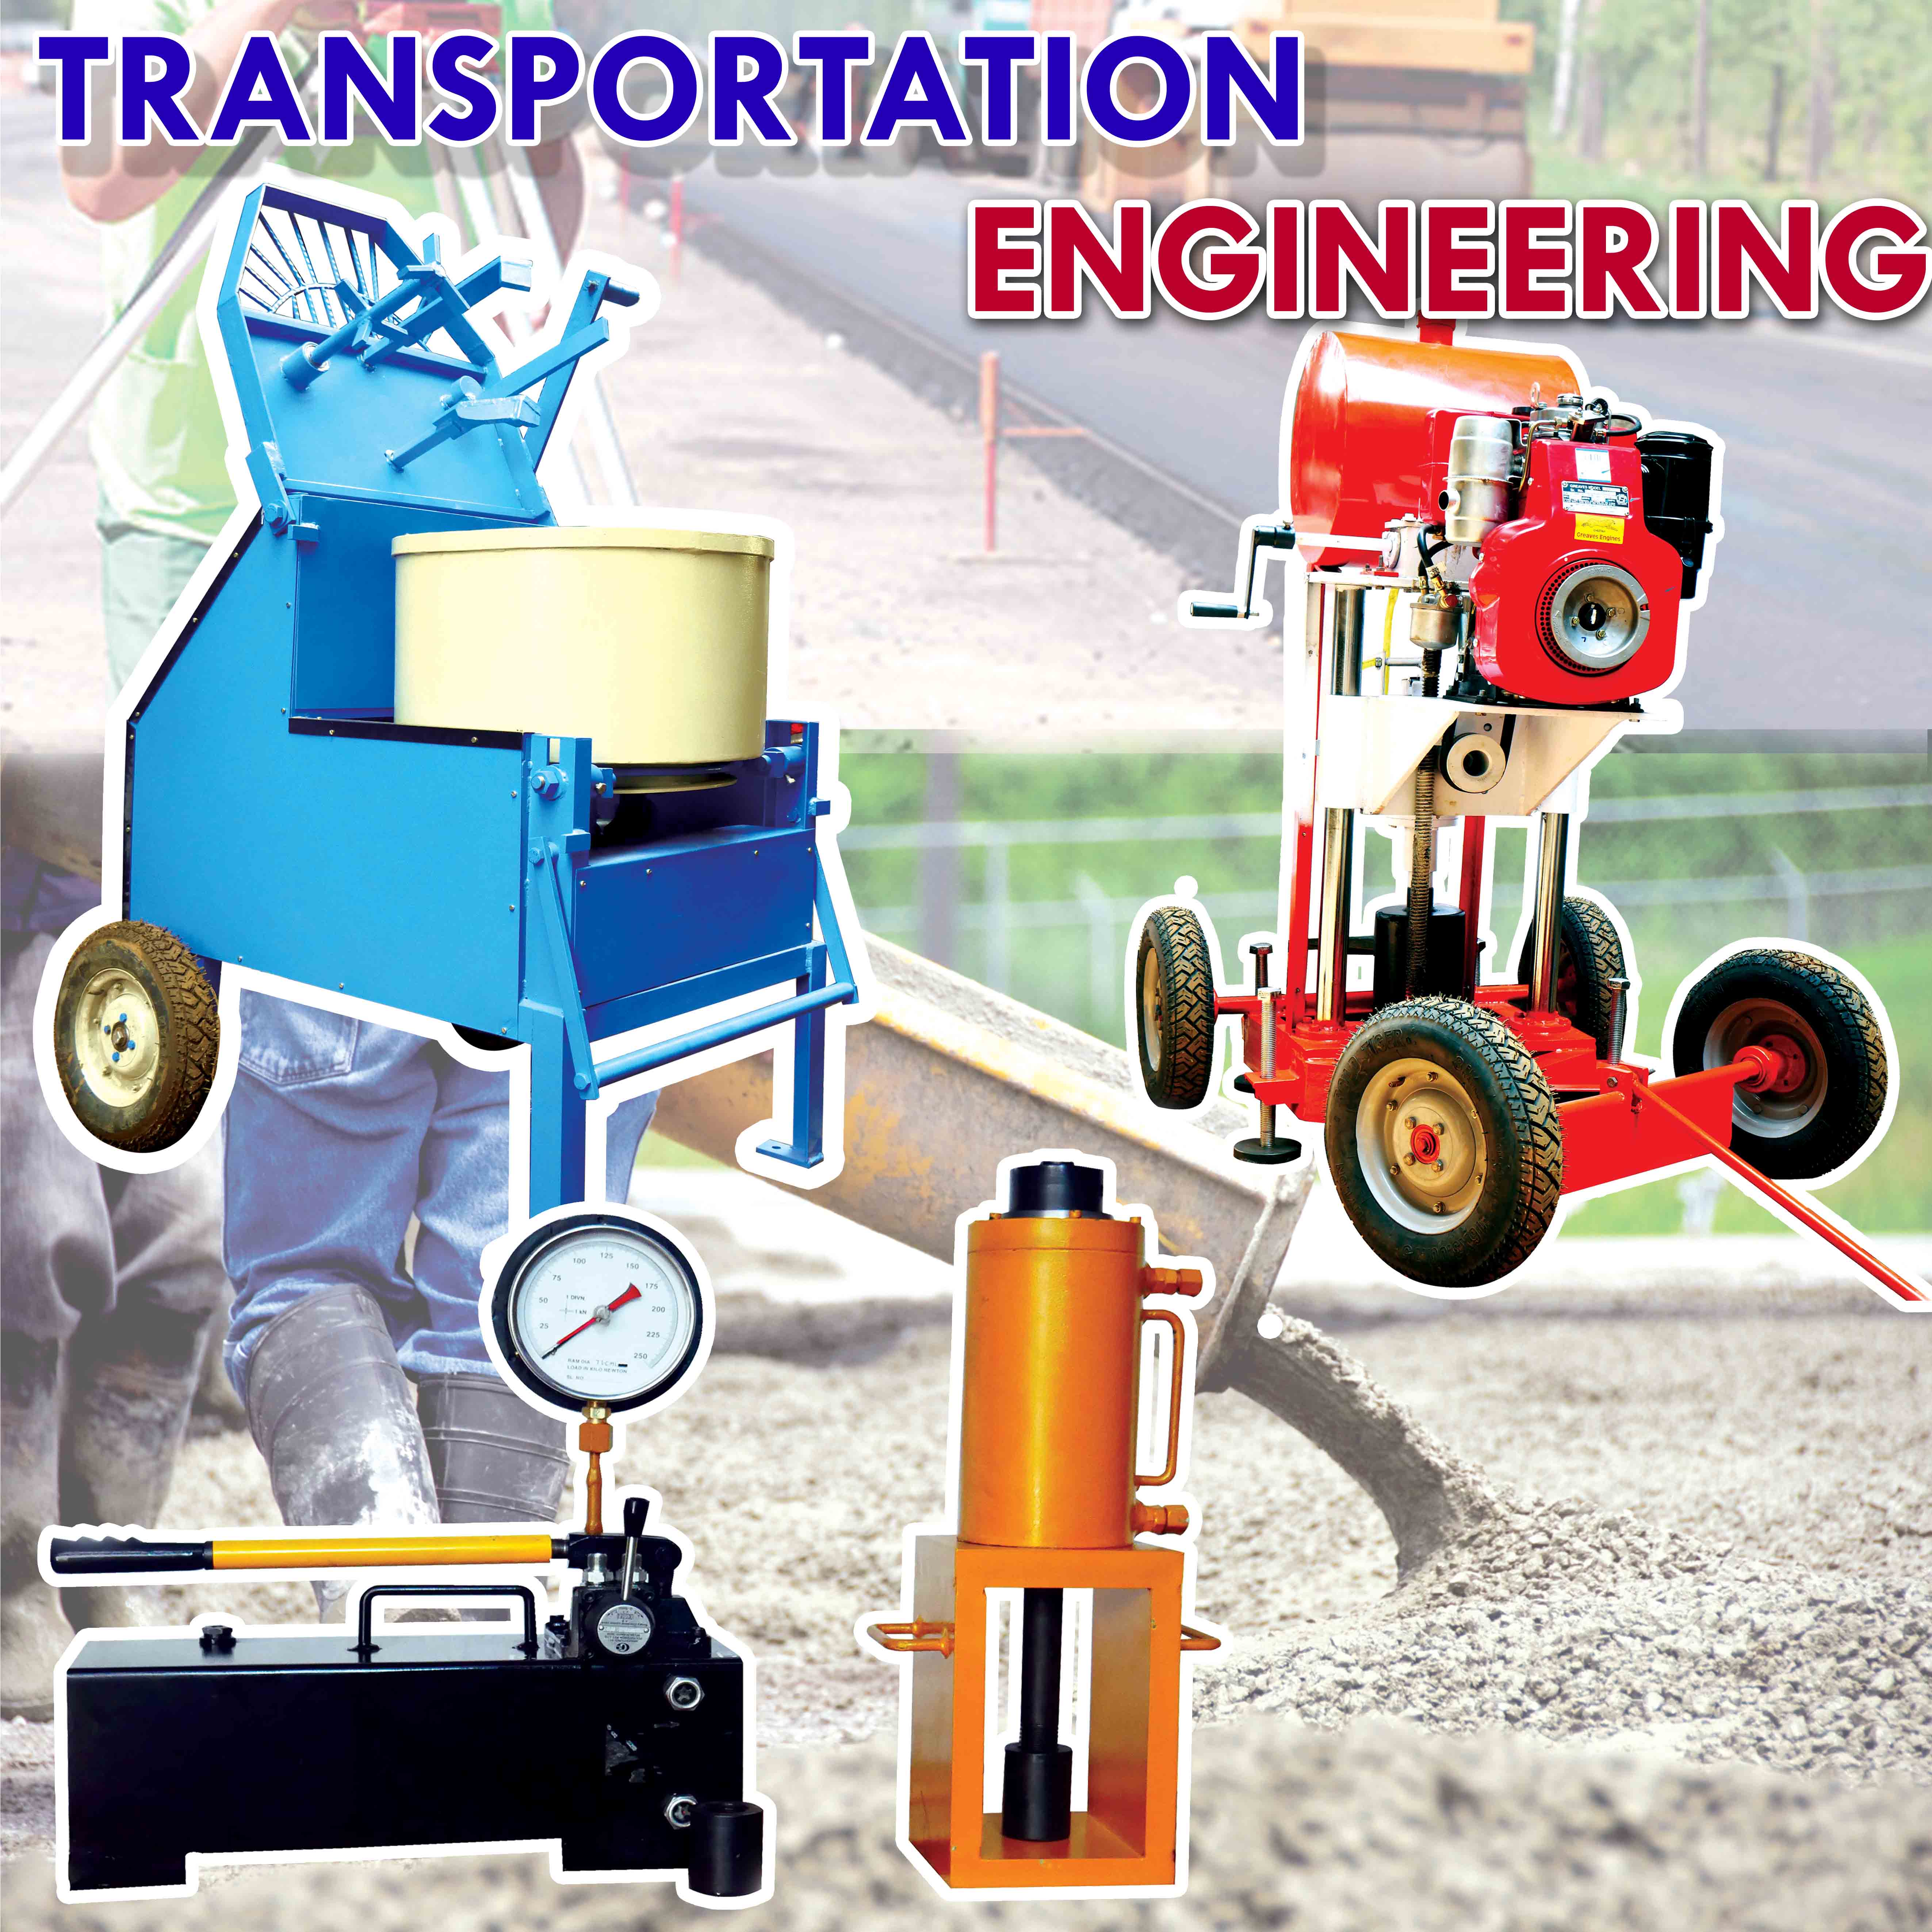 Transportation Engineering Lab Equipment